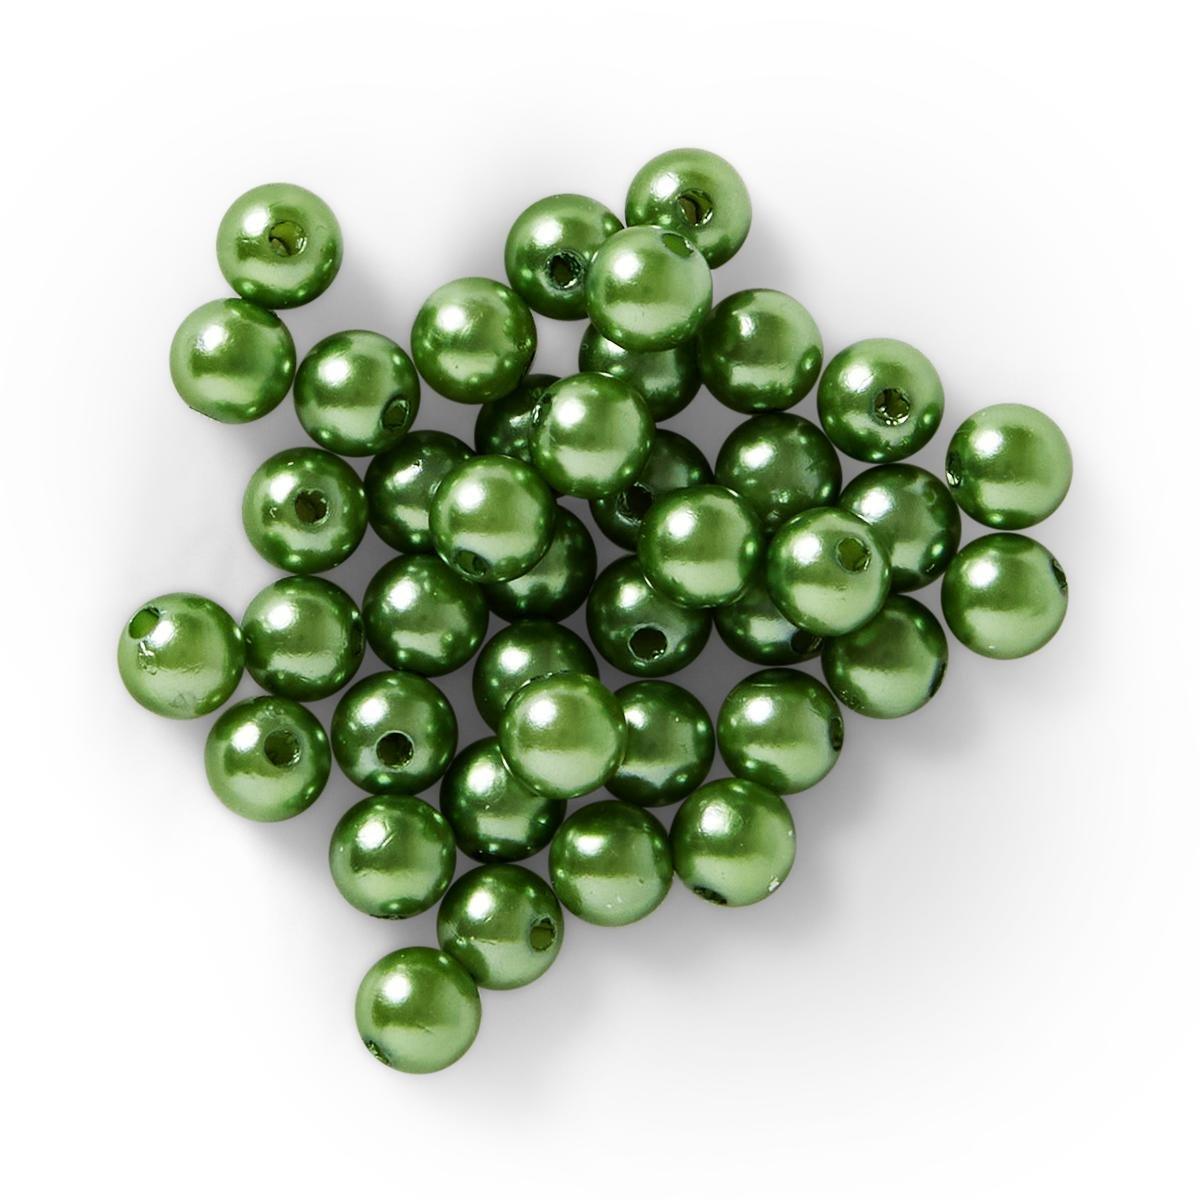 Green plastic beads